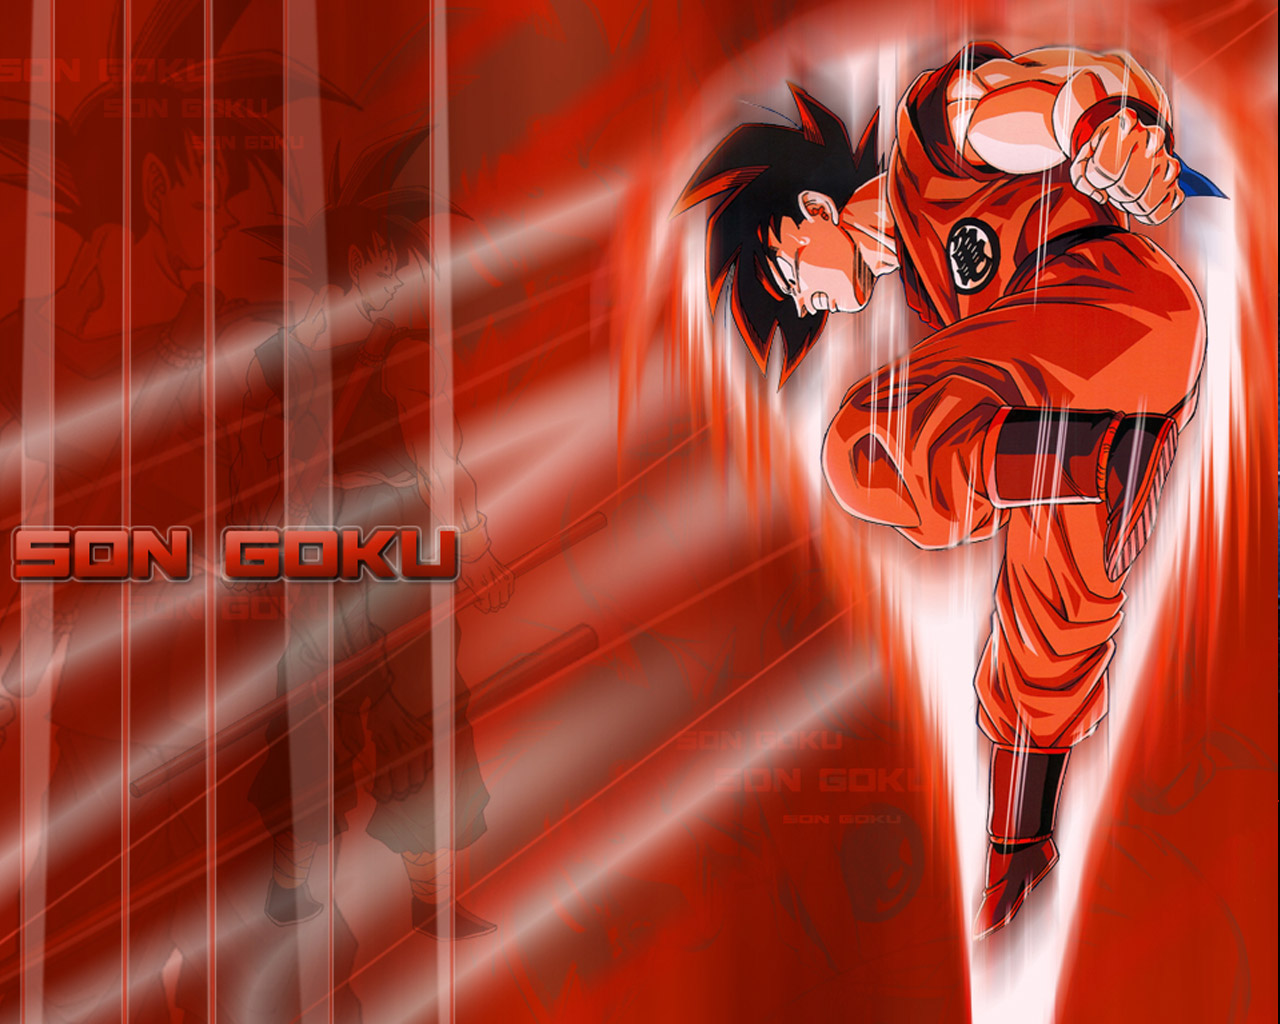 Goku Image HD Wallpaper And Background Photos